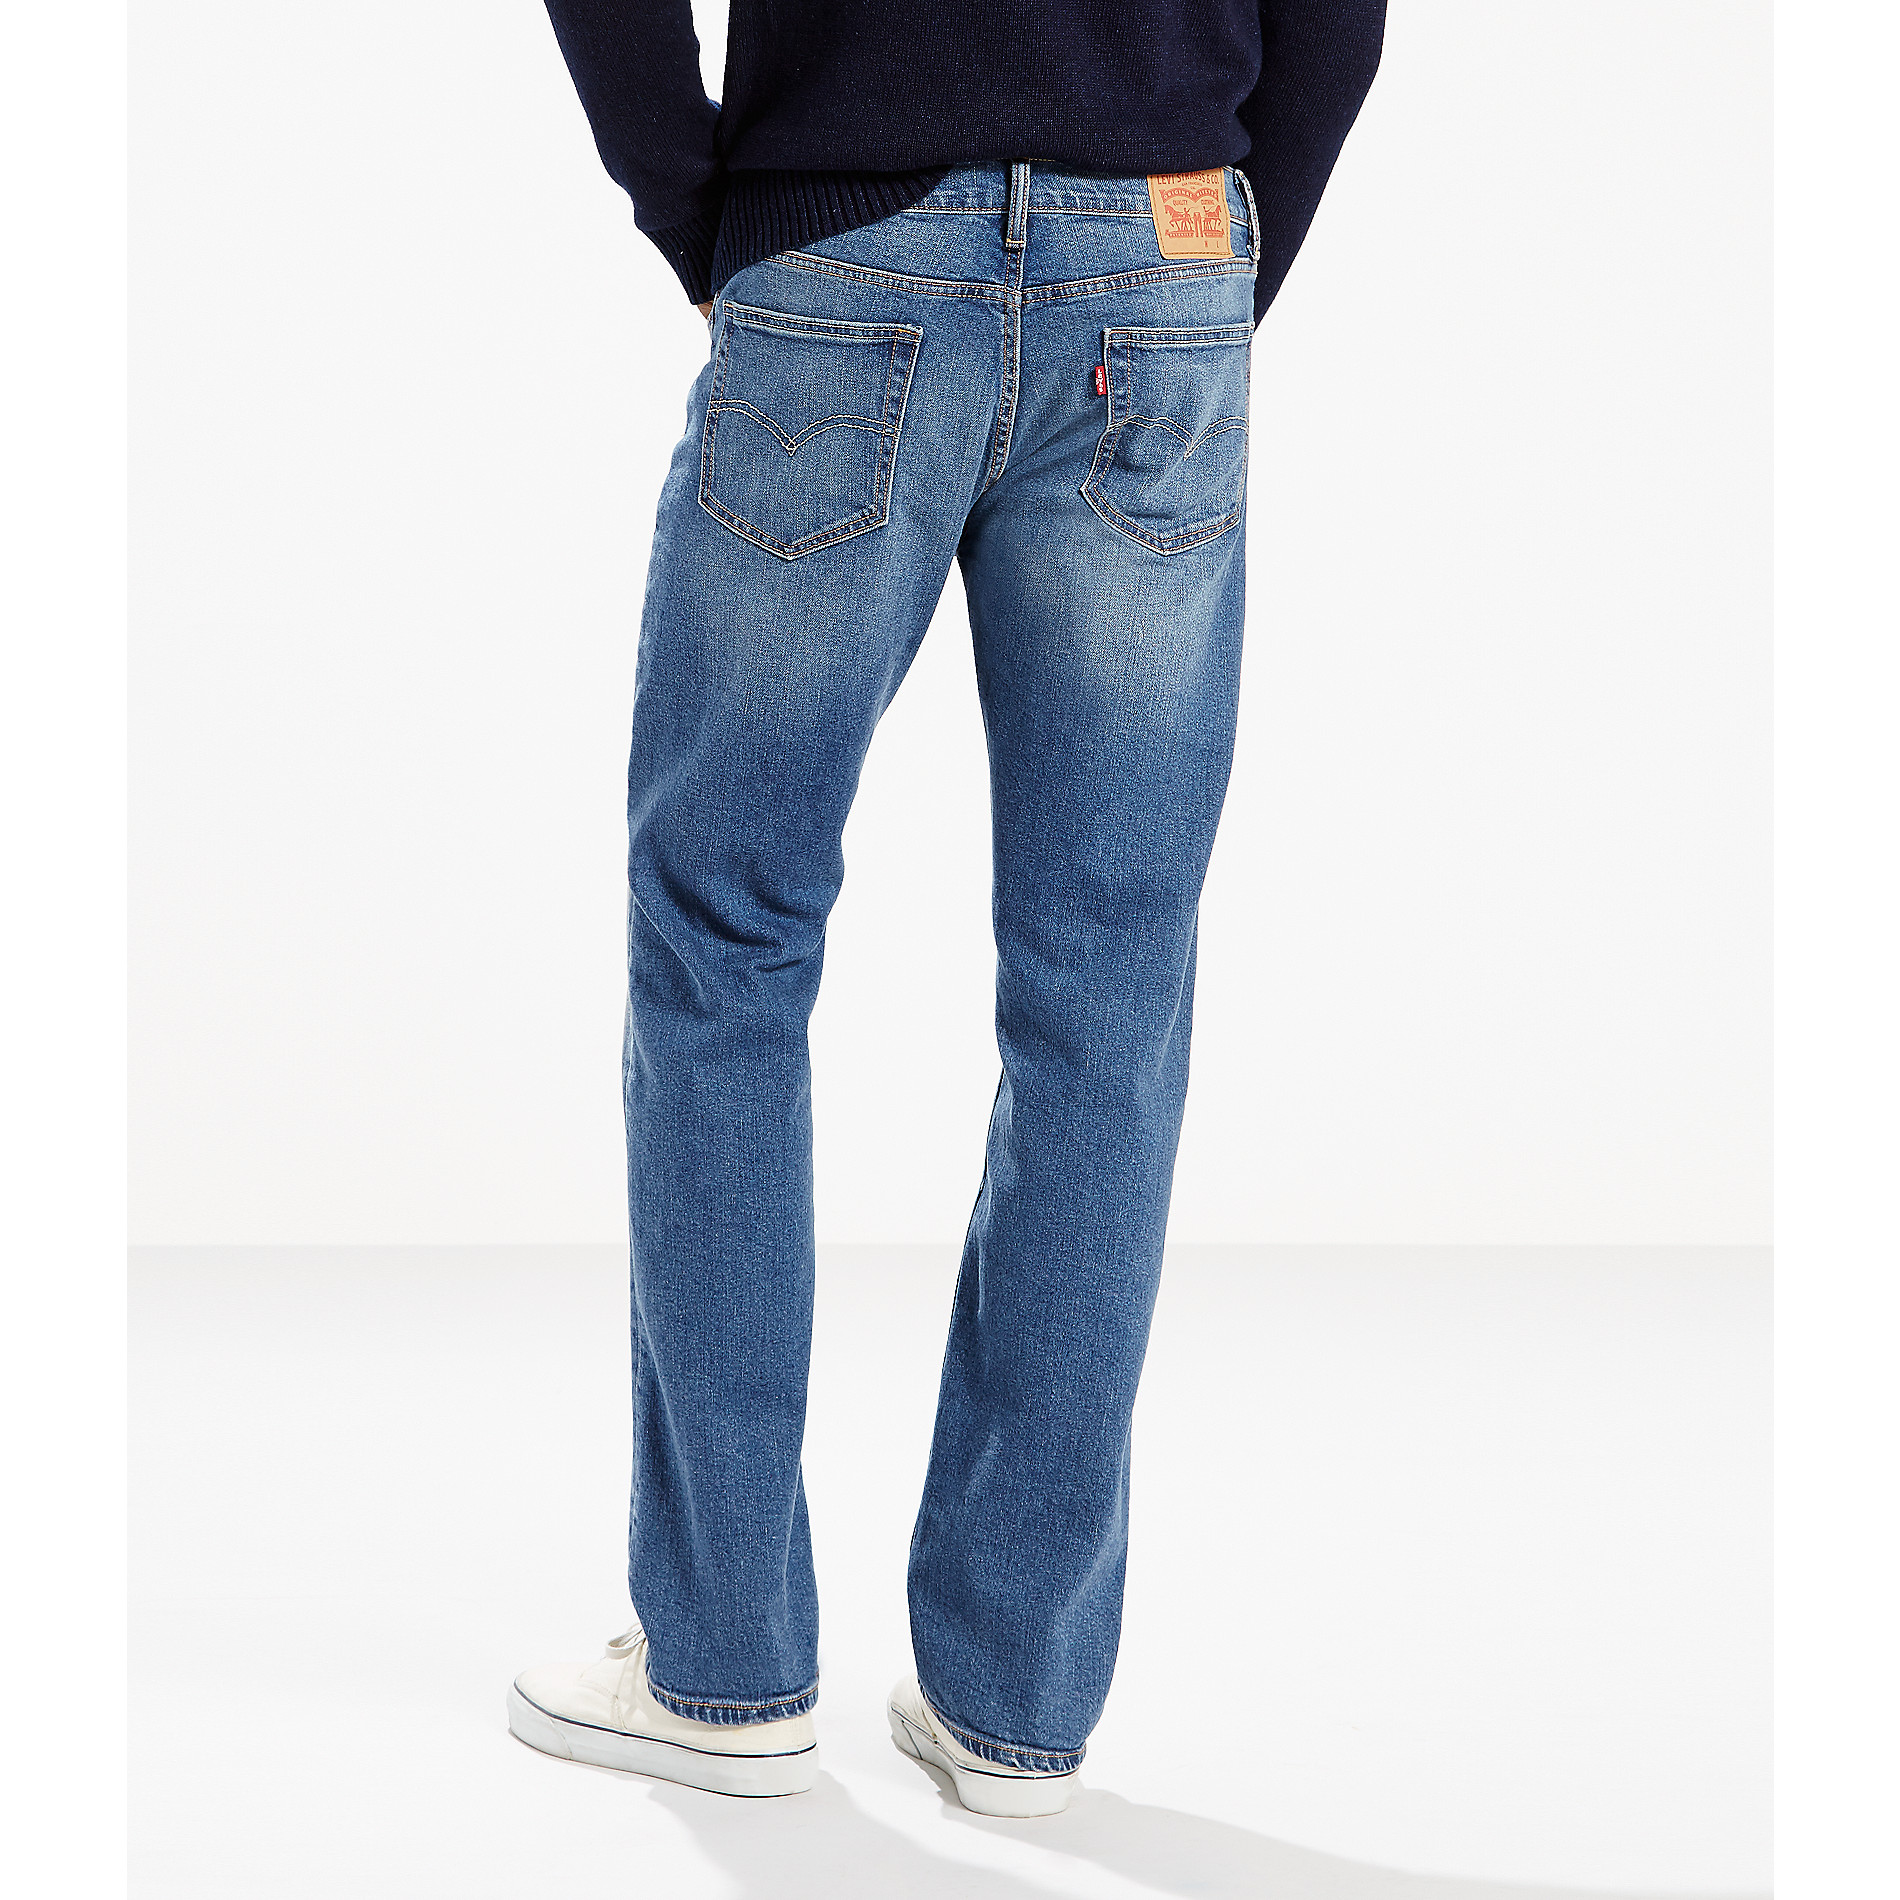 sears 501 jeans